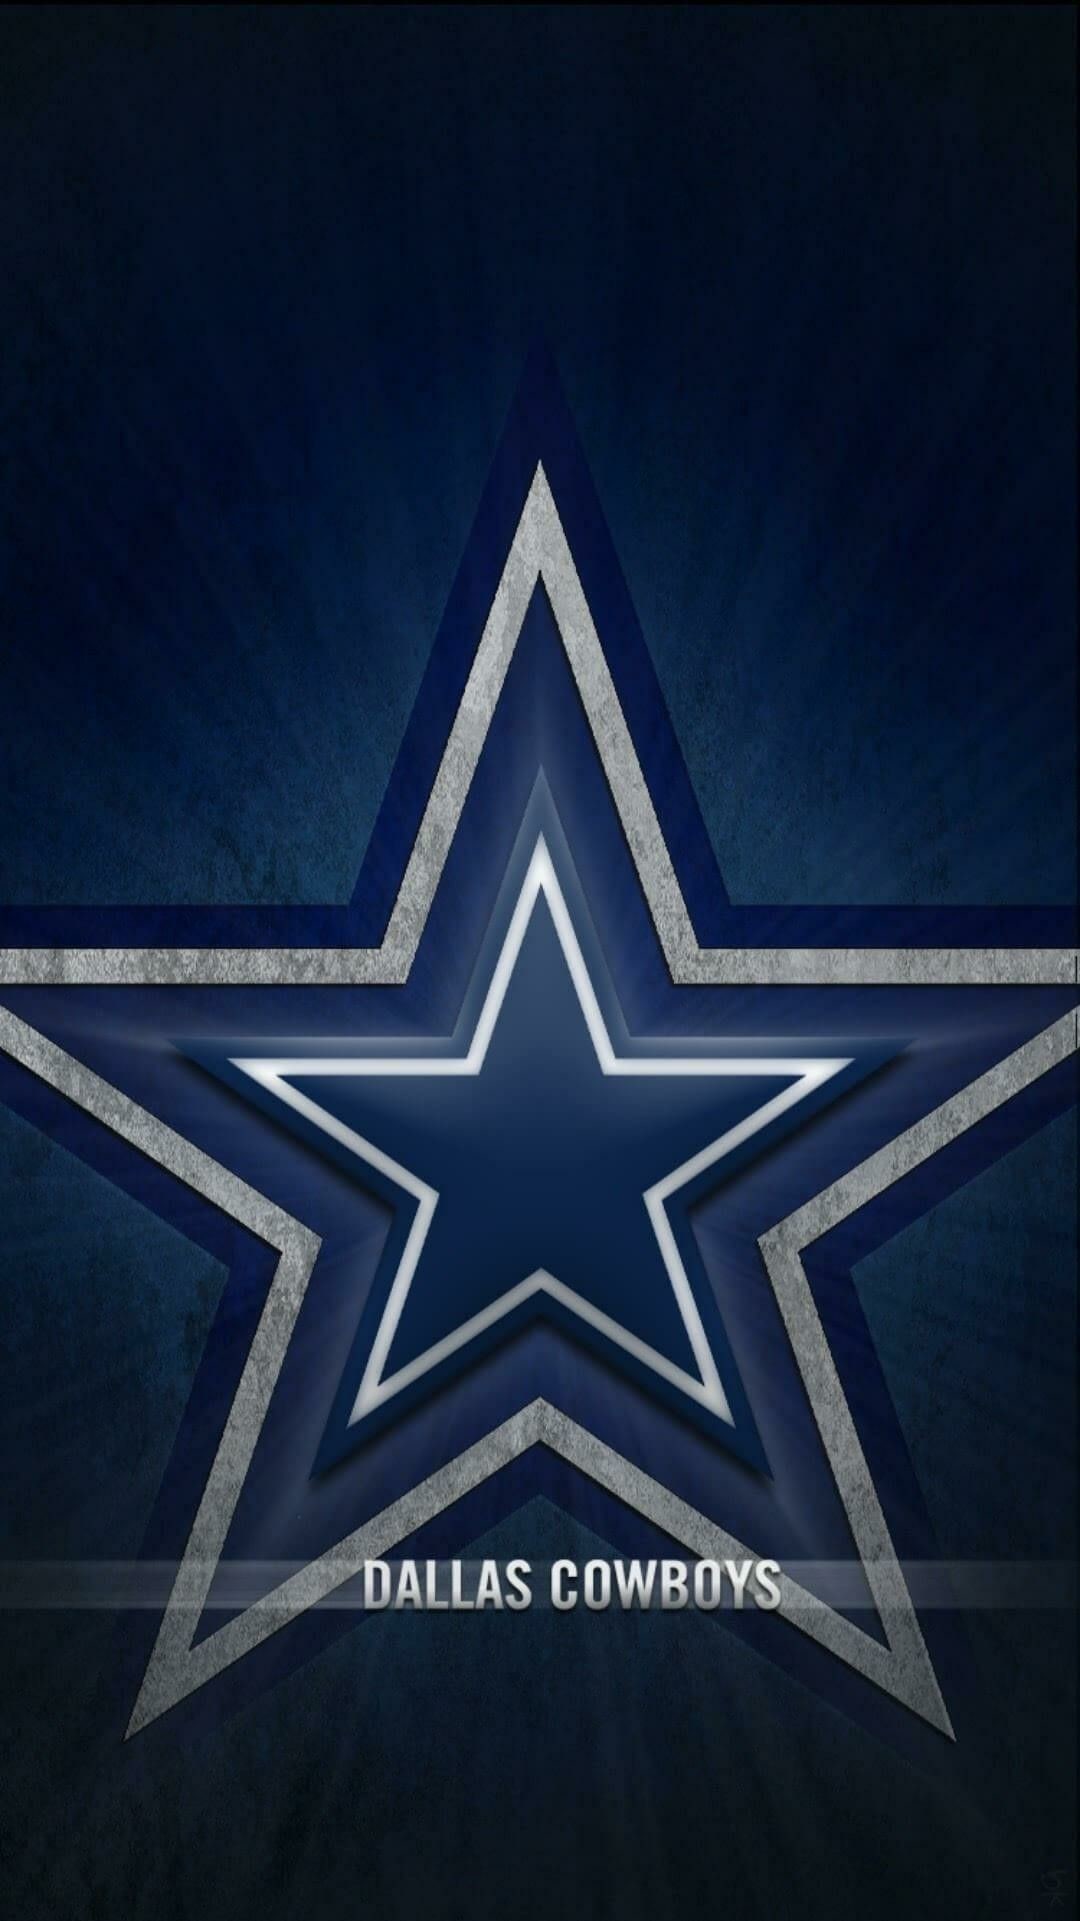 Dallas Cowboys Star Logo Wallpaper 66 images